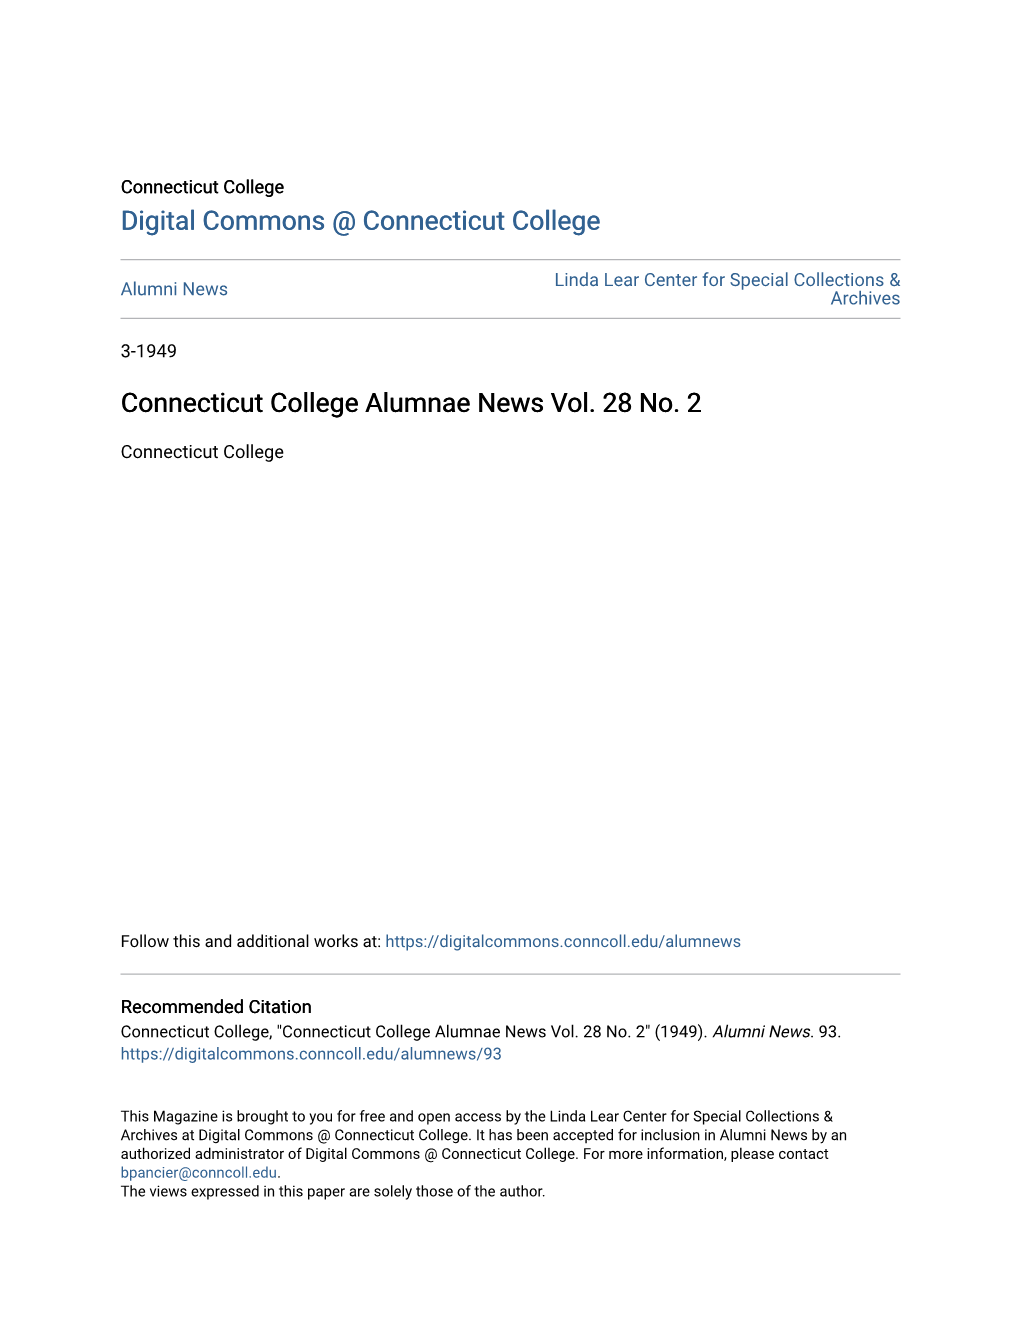 Connecticut College Alumnae News Vol. 28 No. 2